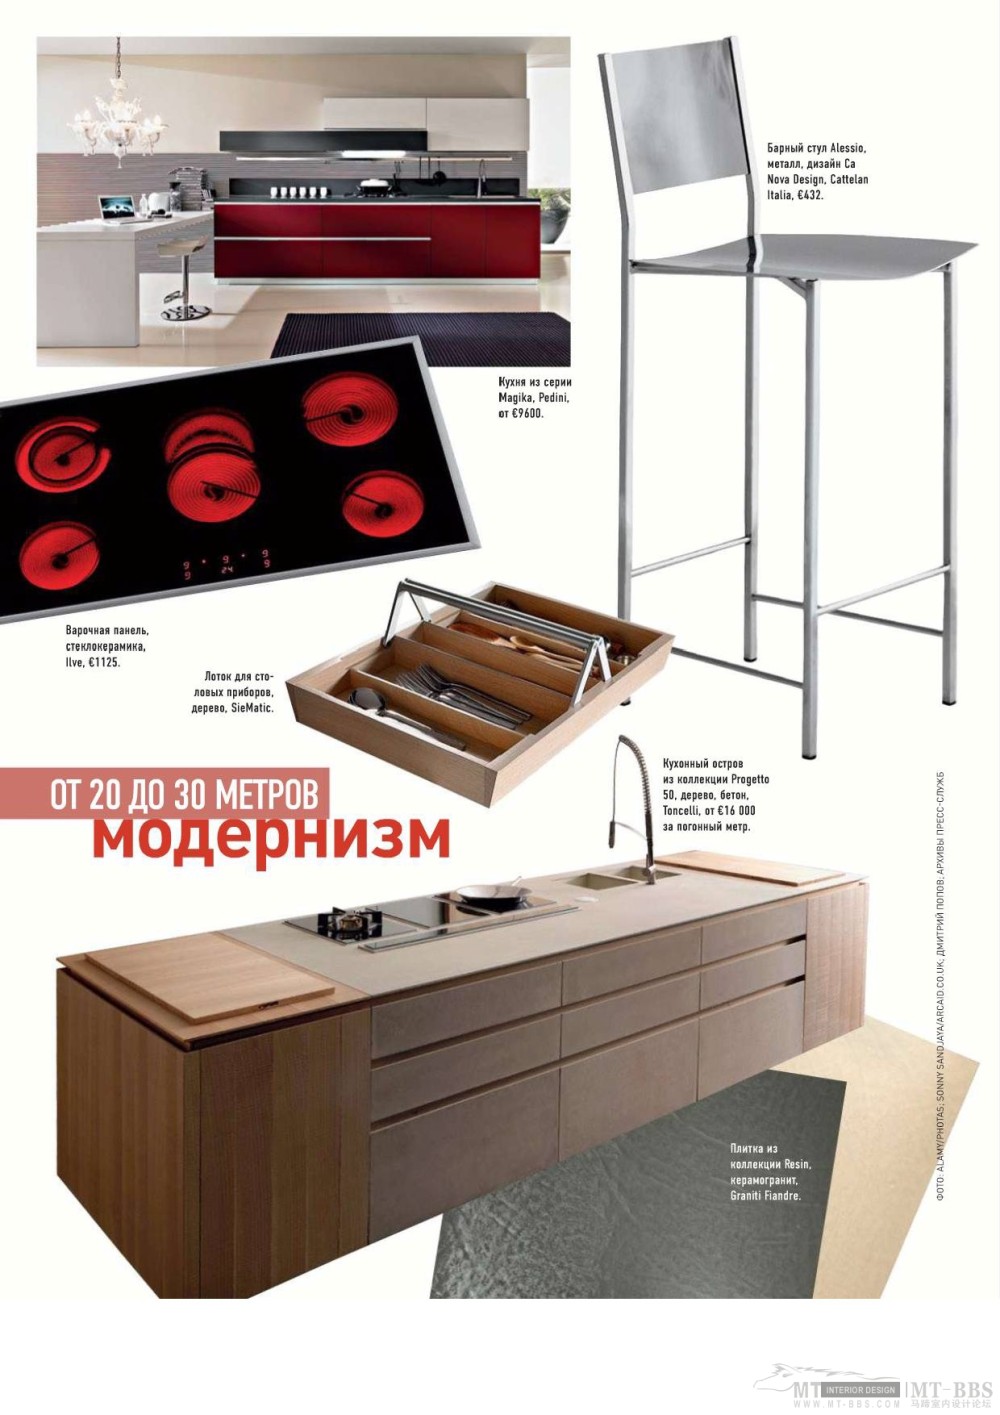 《AD Russia》2010-09(国外陈设设计杂志)_AD Russia 2010-09MT-BBS-260.jpg